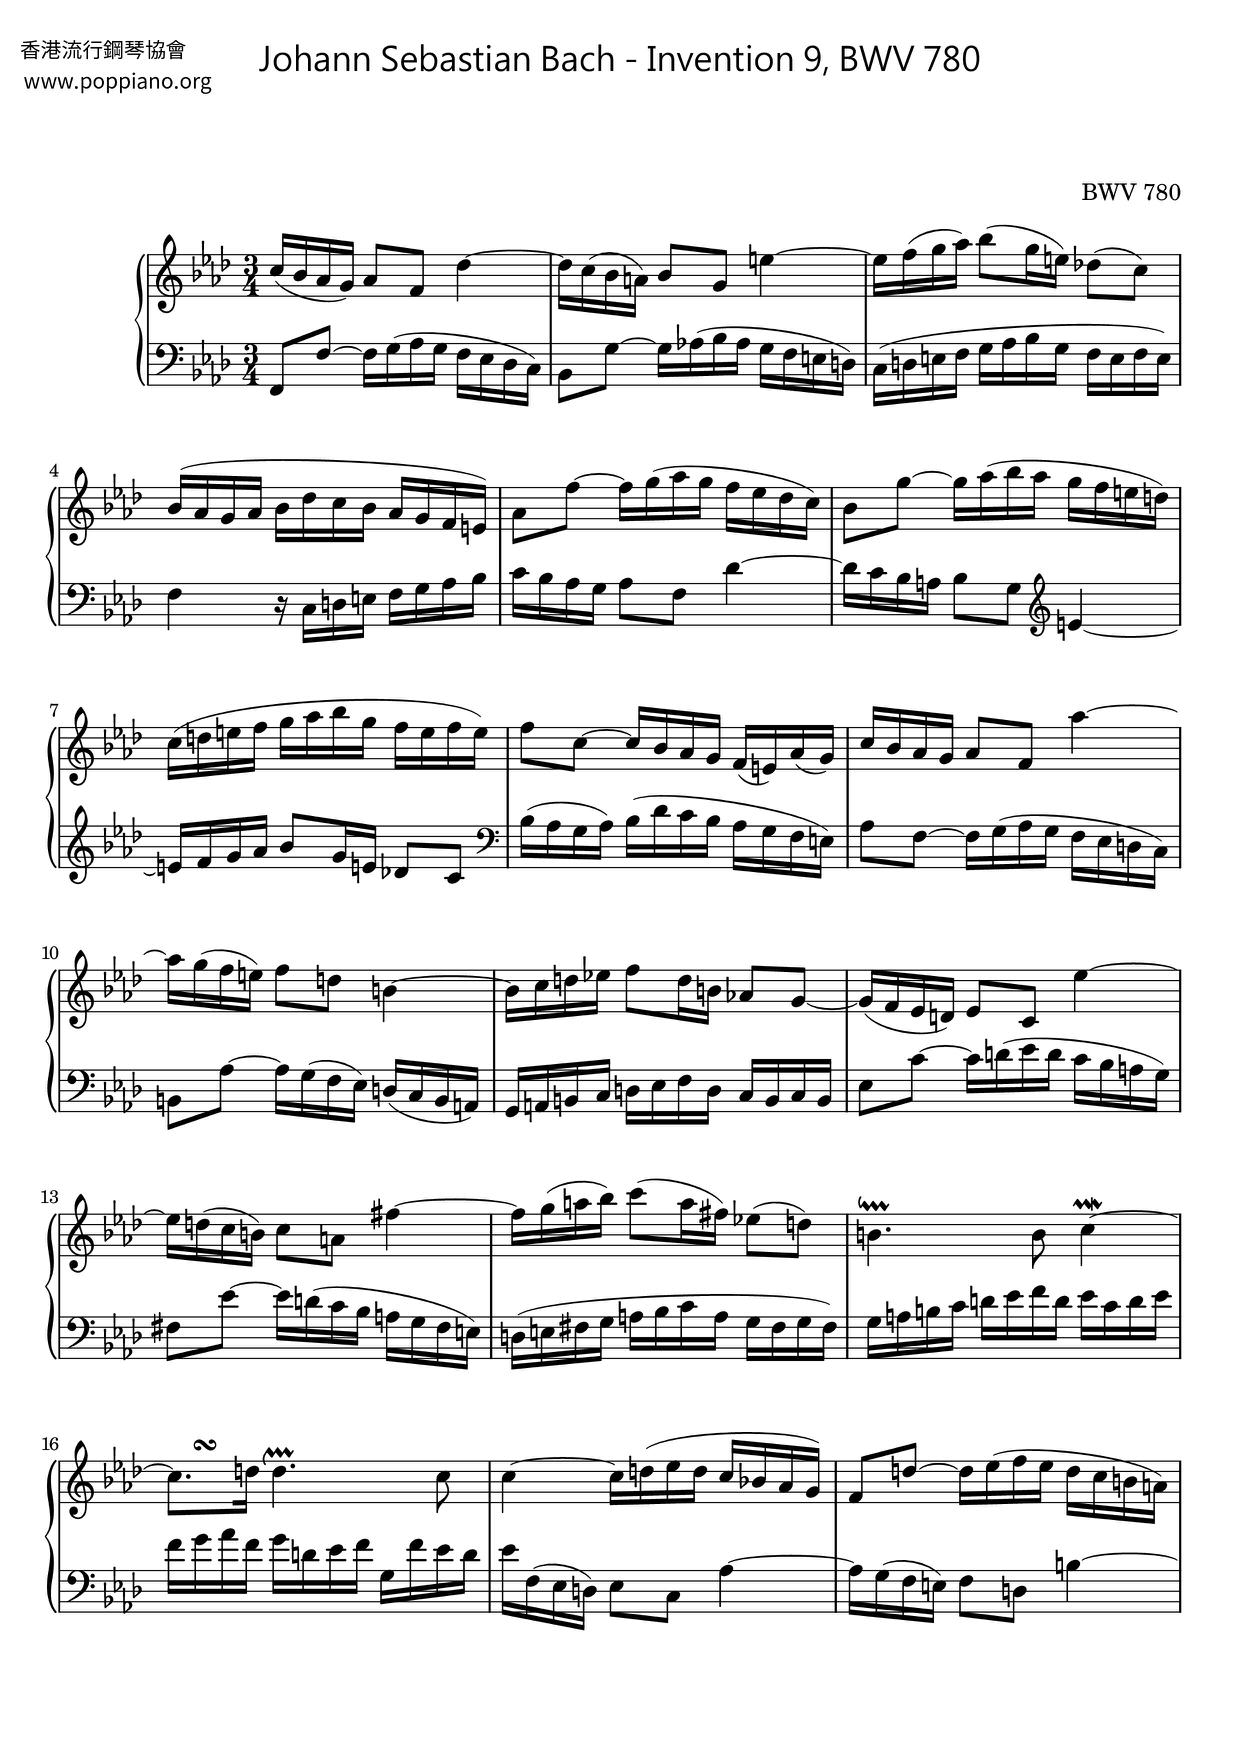 Invention 9, BWV 780 Score